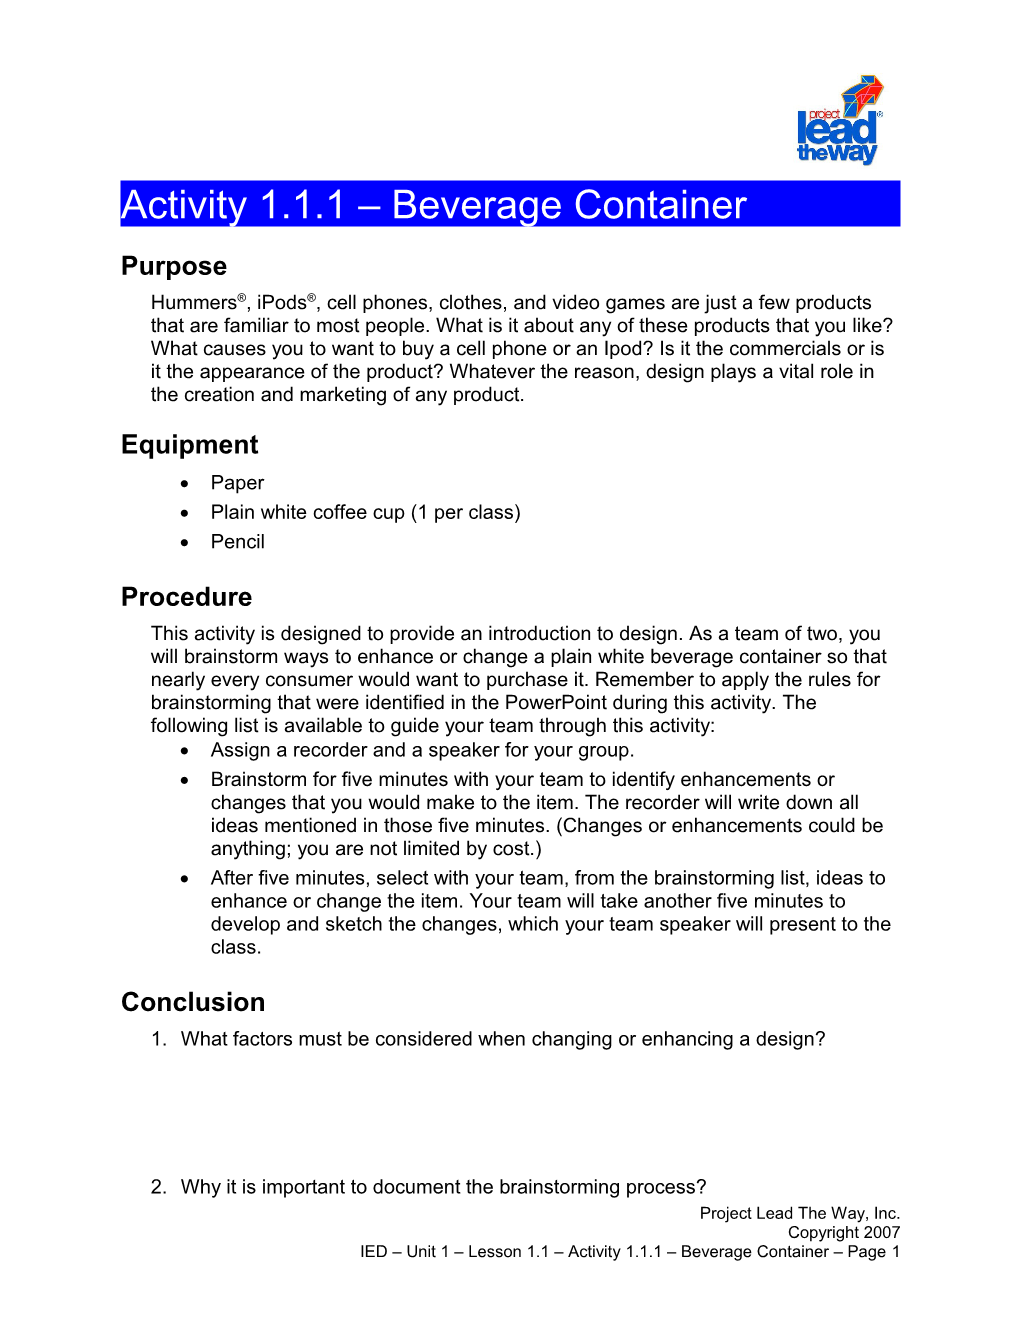 Activity 1.1.1: Beverage Container